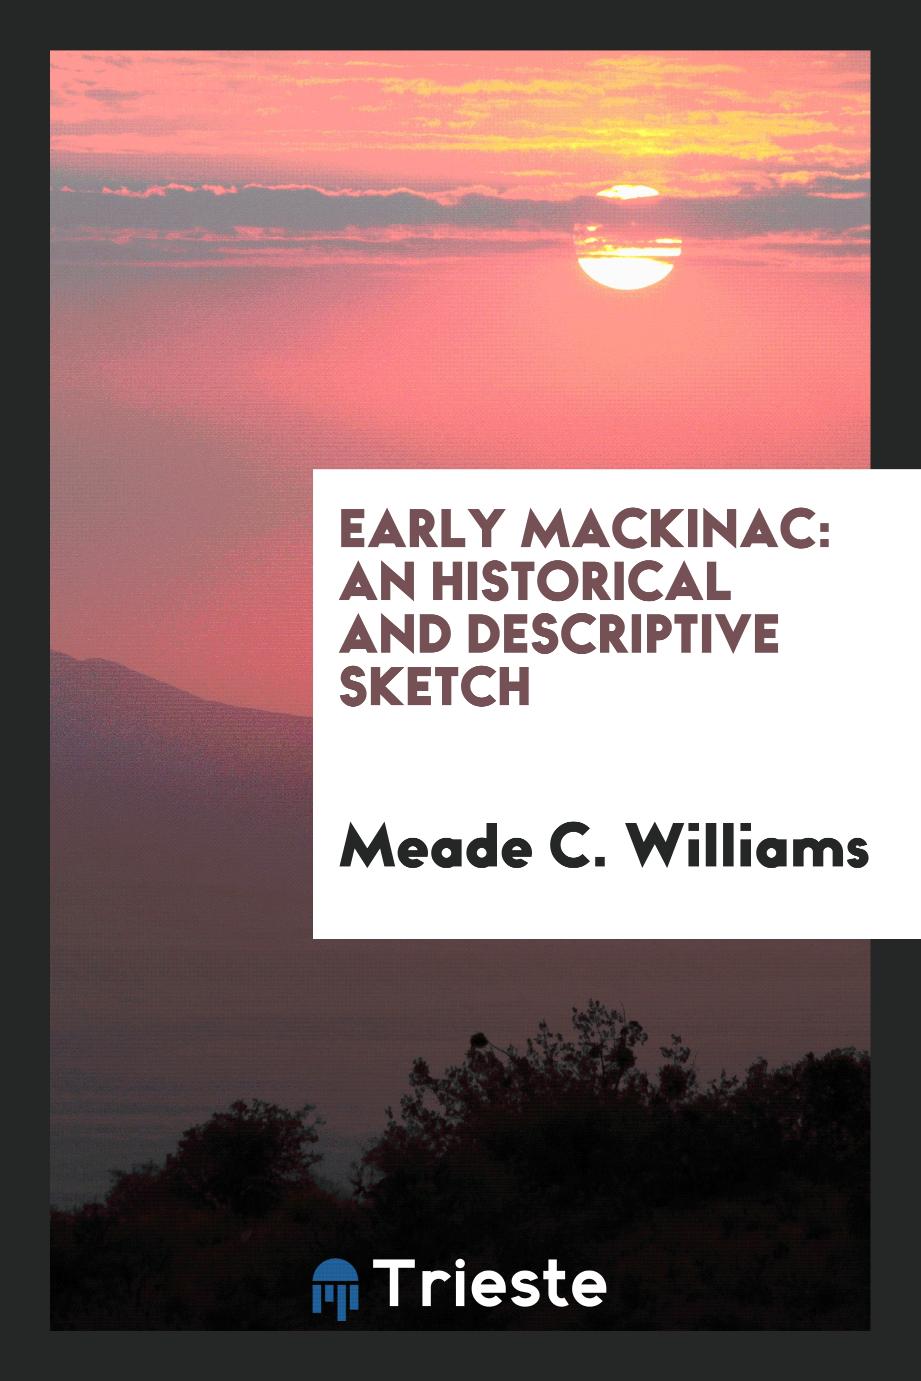 Early Mackinac: An Historical and Descriptive Sketch